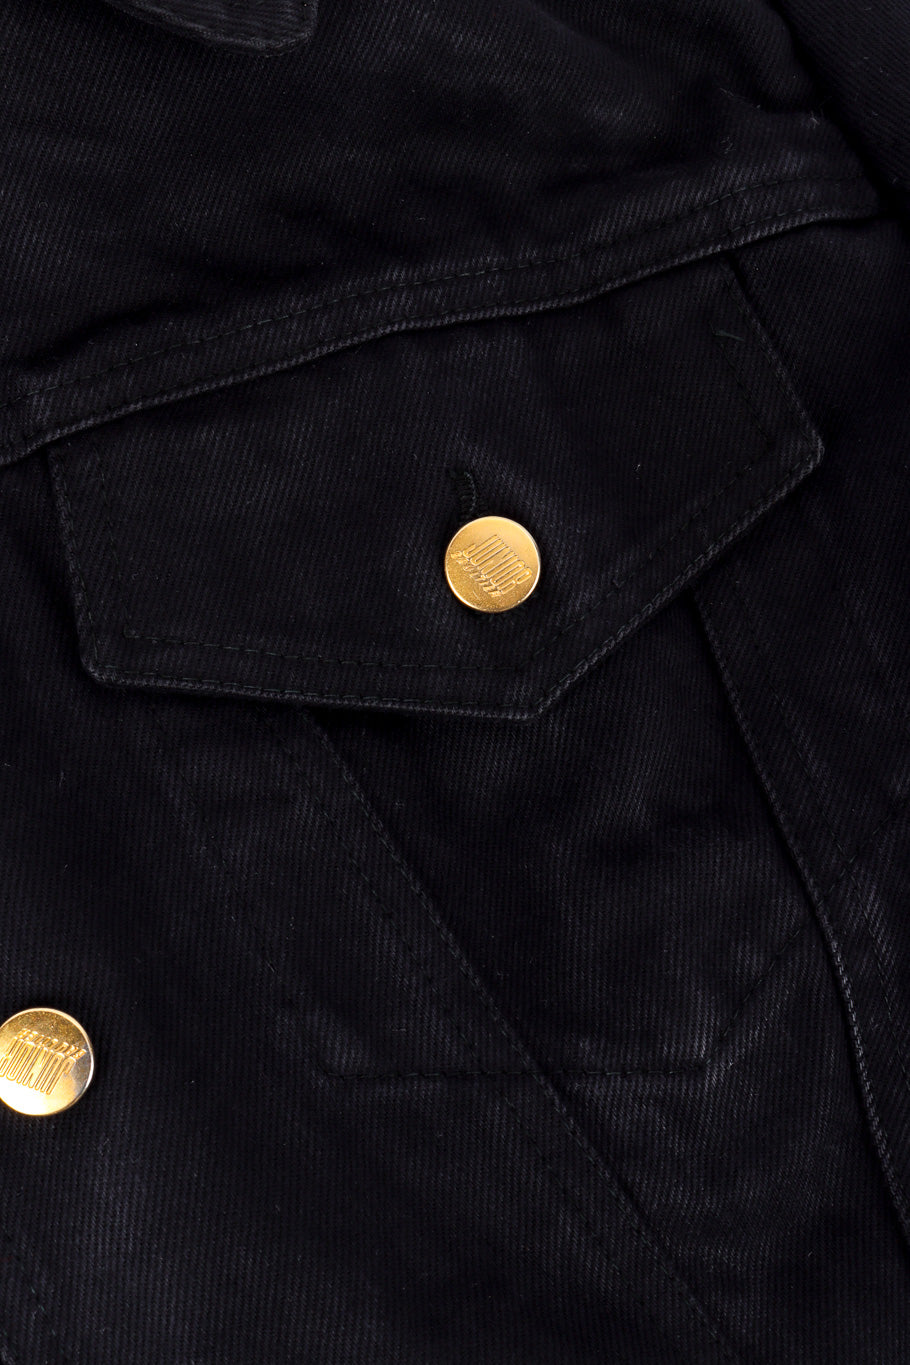 Junior Gaultier Denim Peplum Jacket flap pocket closeup @recessla